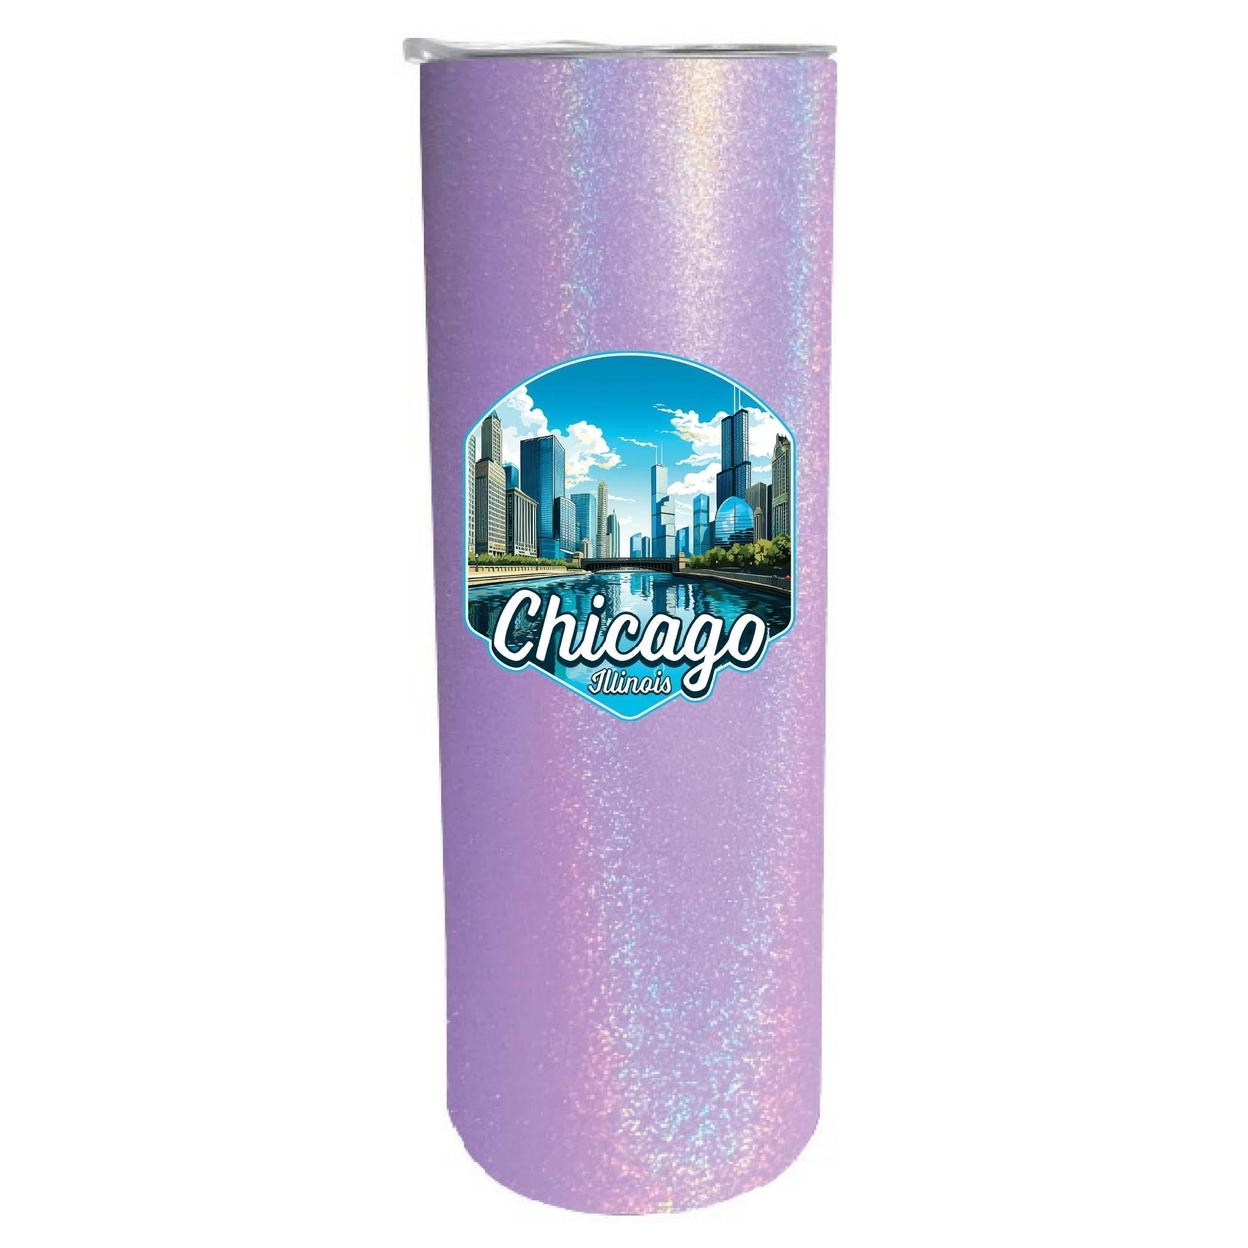 Chicago Illinois A Souvenir 20 Oz Insulated Skinny Tumbler - Purple Glitter,,Single